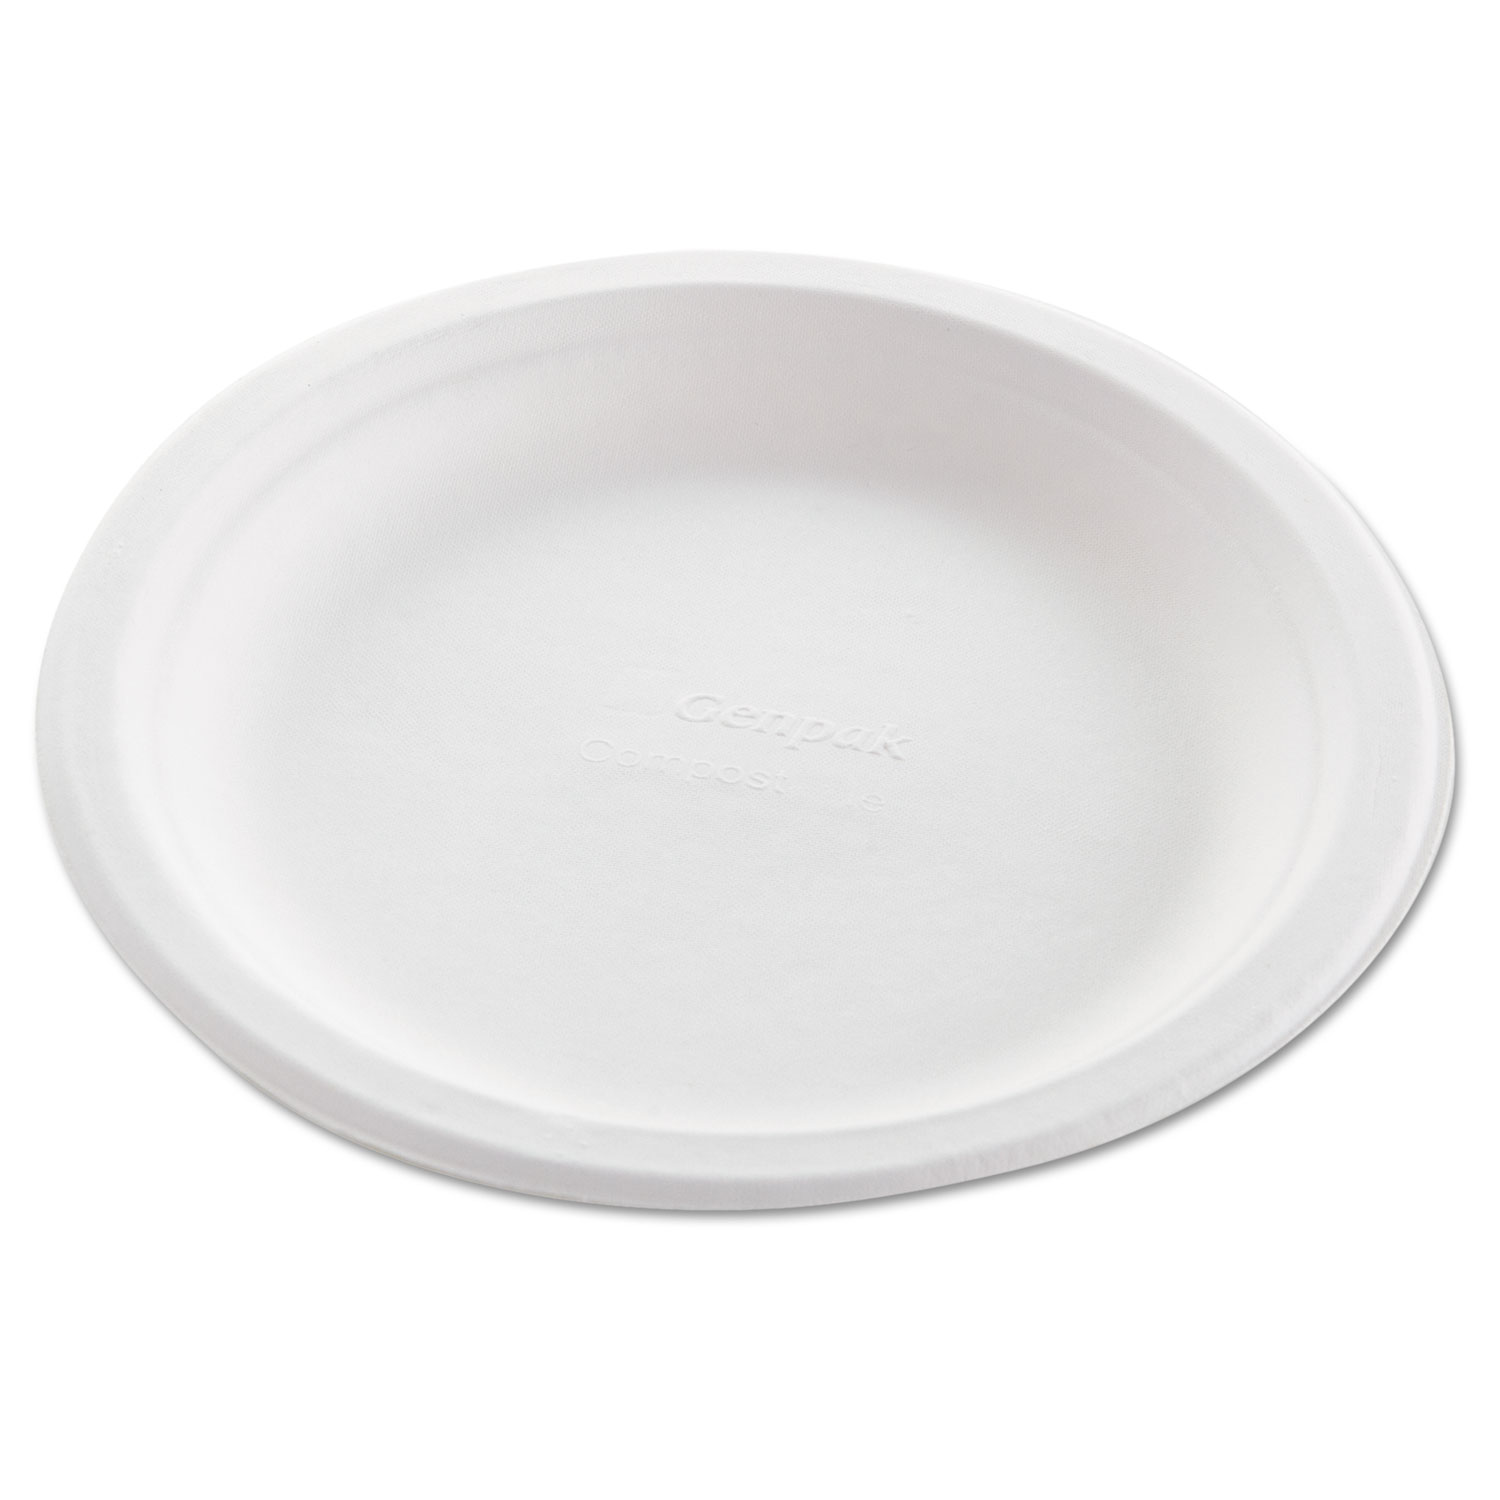  Genpak HF809--- Harvest Fiber Dinnerware, Plate, 8 3/4 Diameter, Natural White, 50/Pack, 10/CT (GNPHF809) 